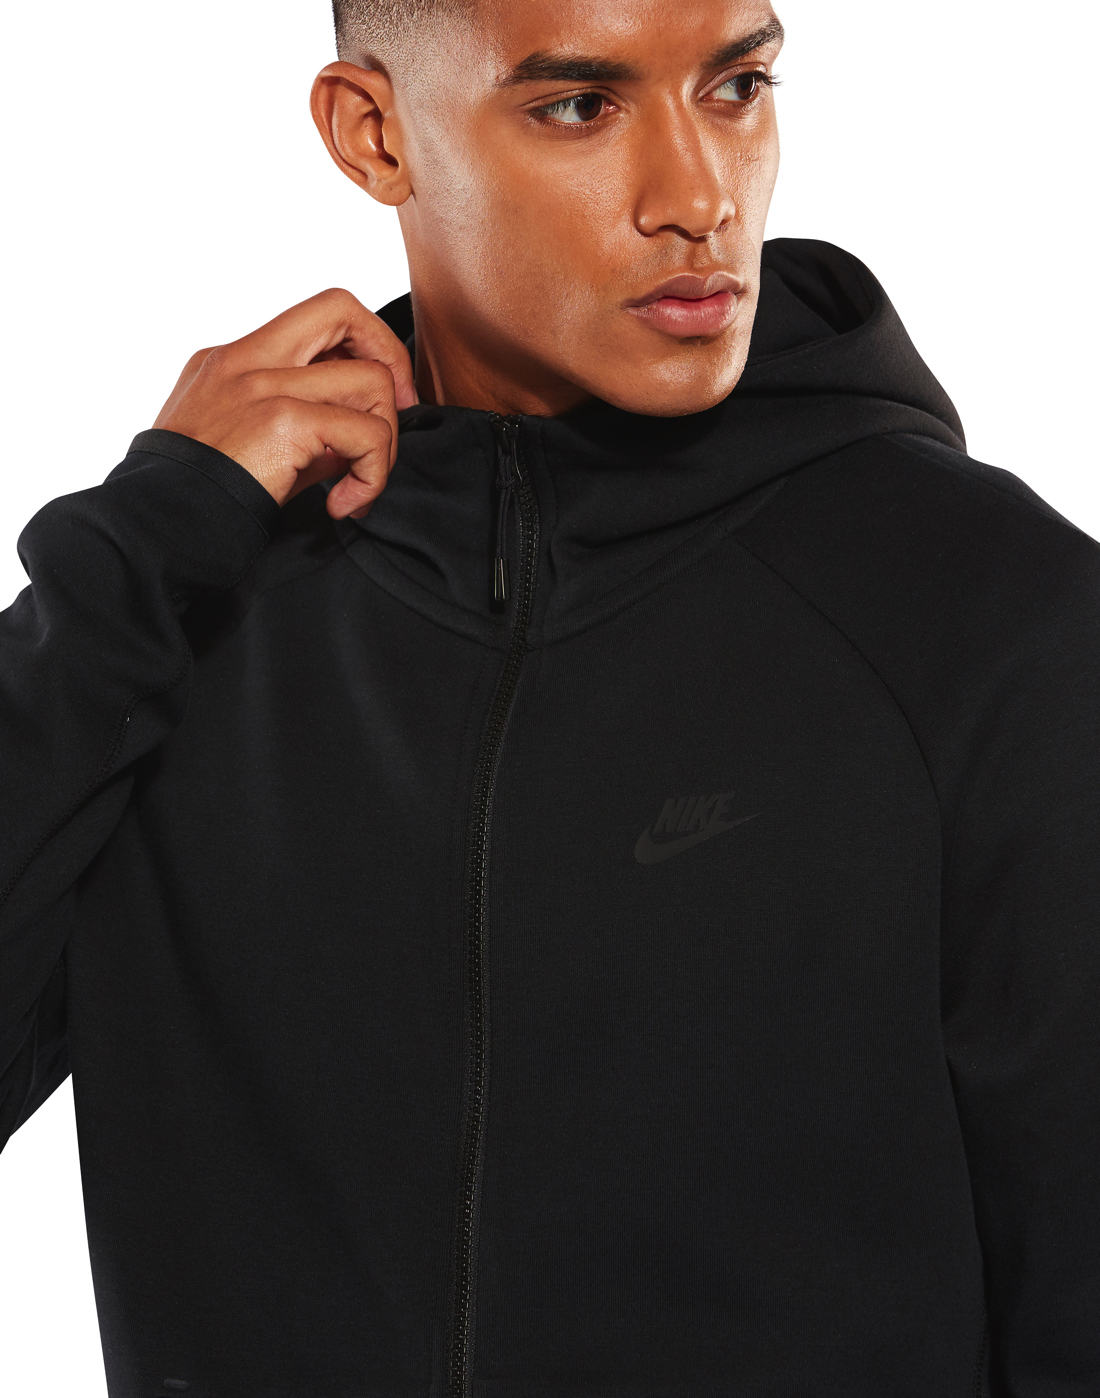 Nike Mens Tech Fleece Full Zip Hoodie - Black | Life Style Sports IE